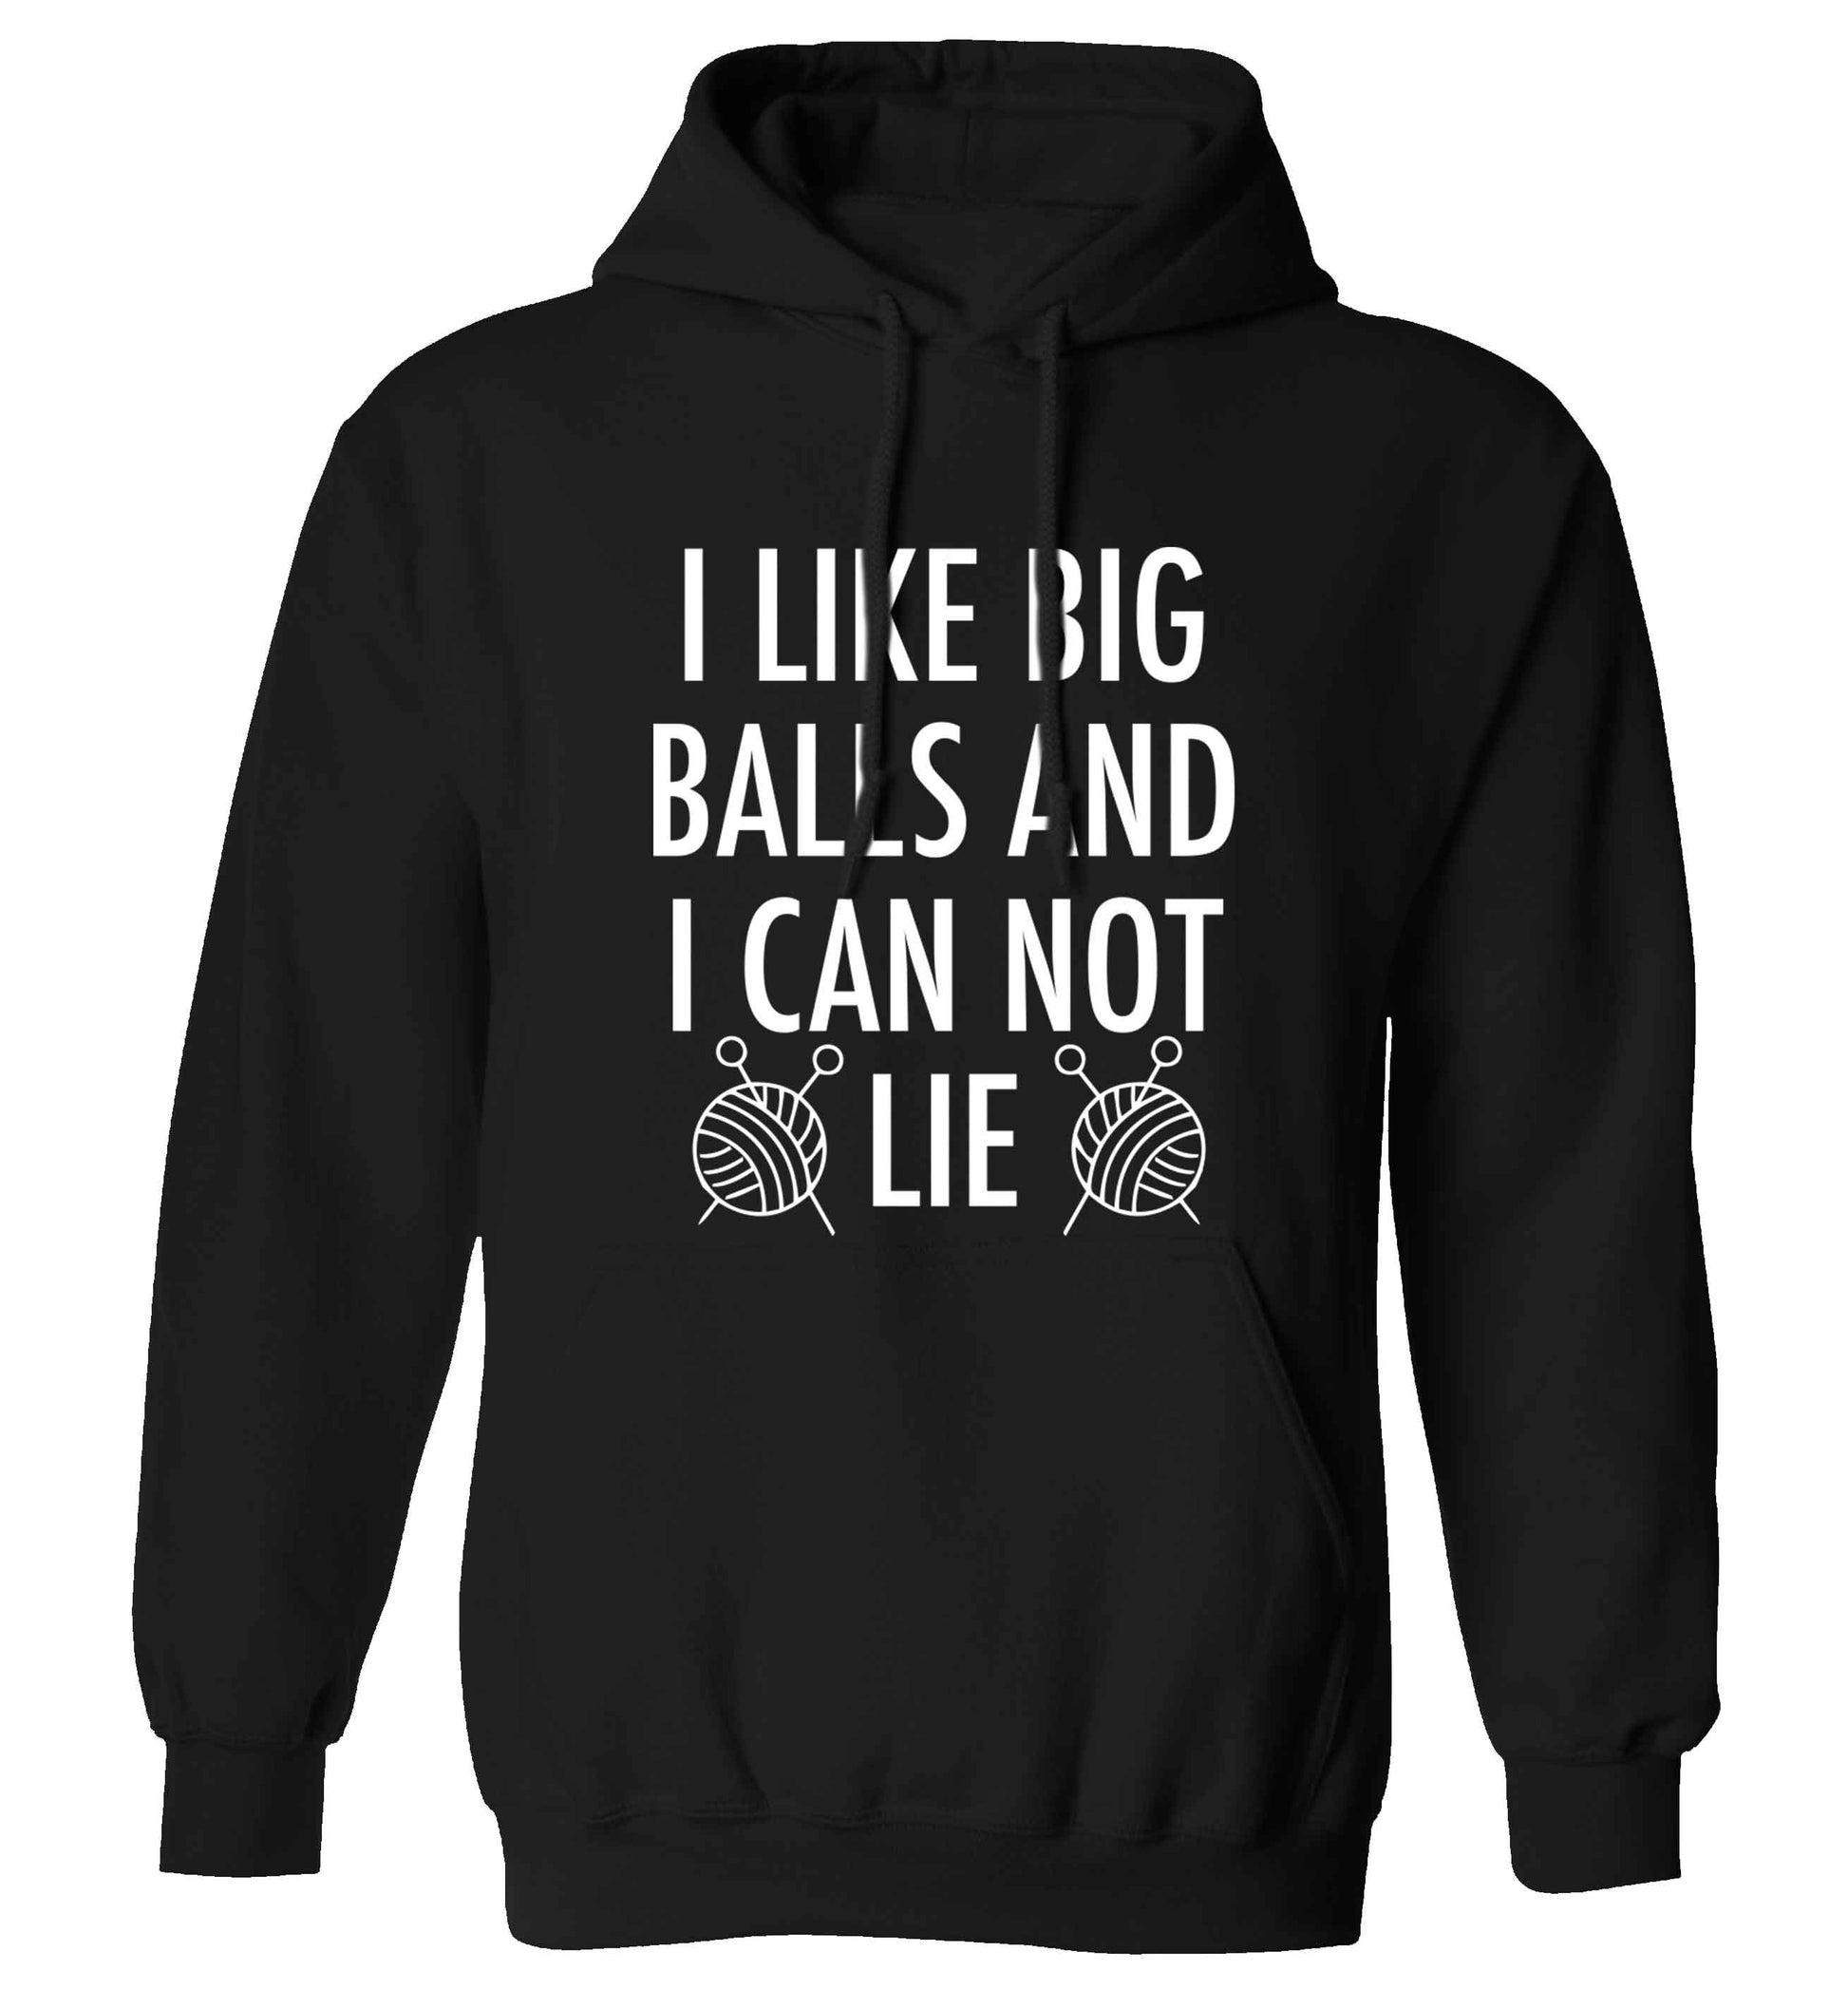 I like big balls and I can not lie adults unisex black hoodie 2XL